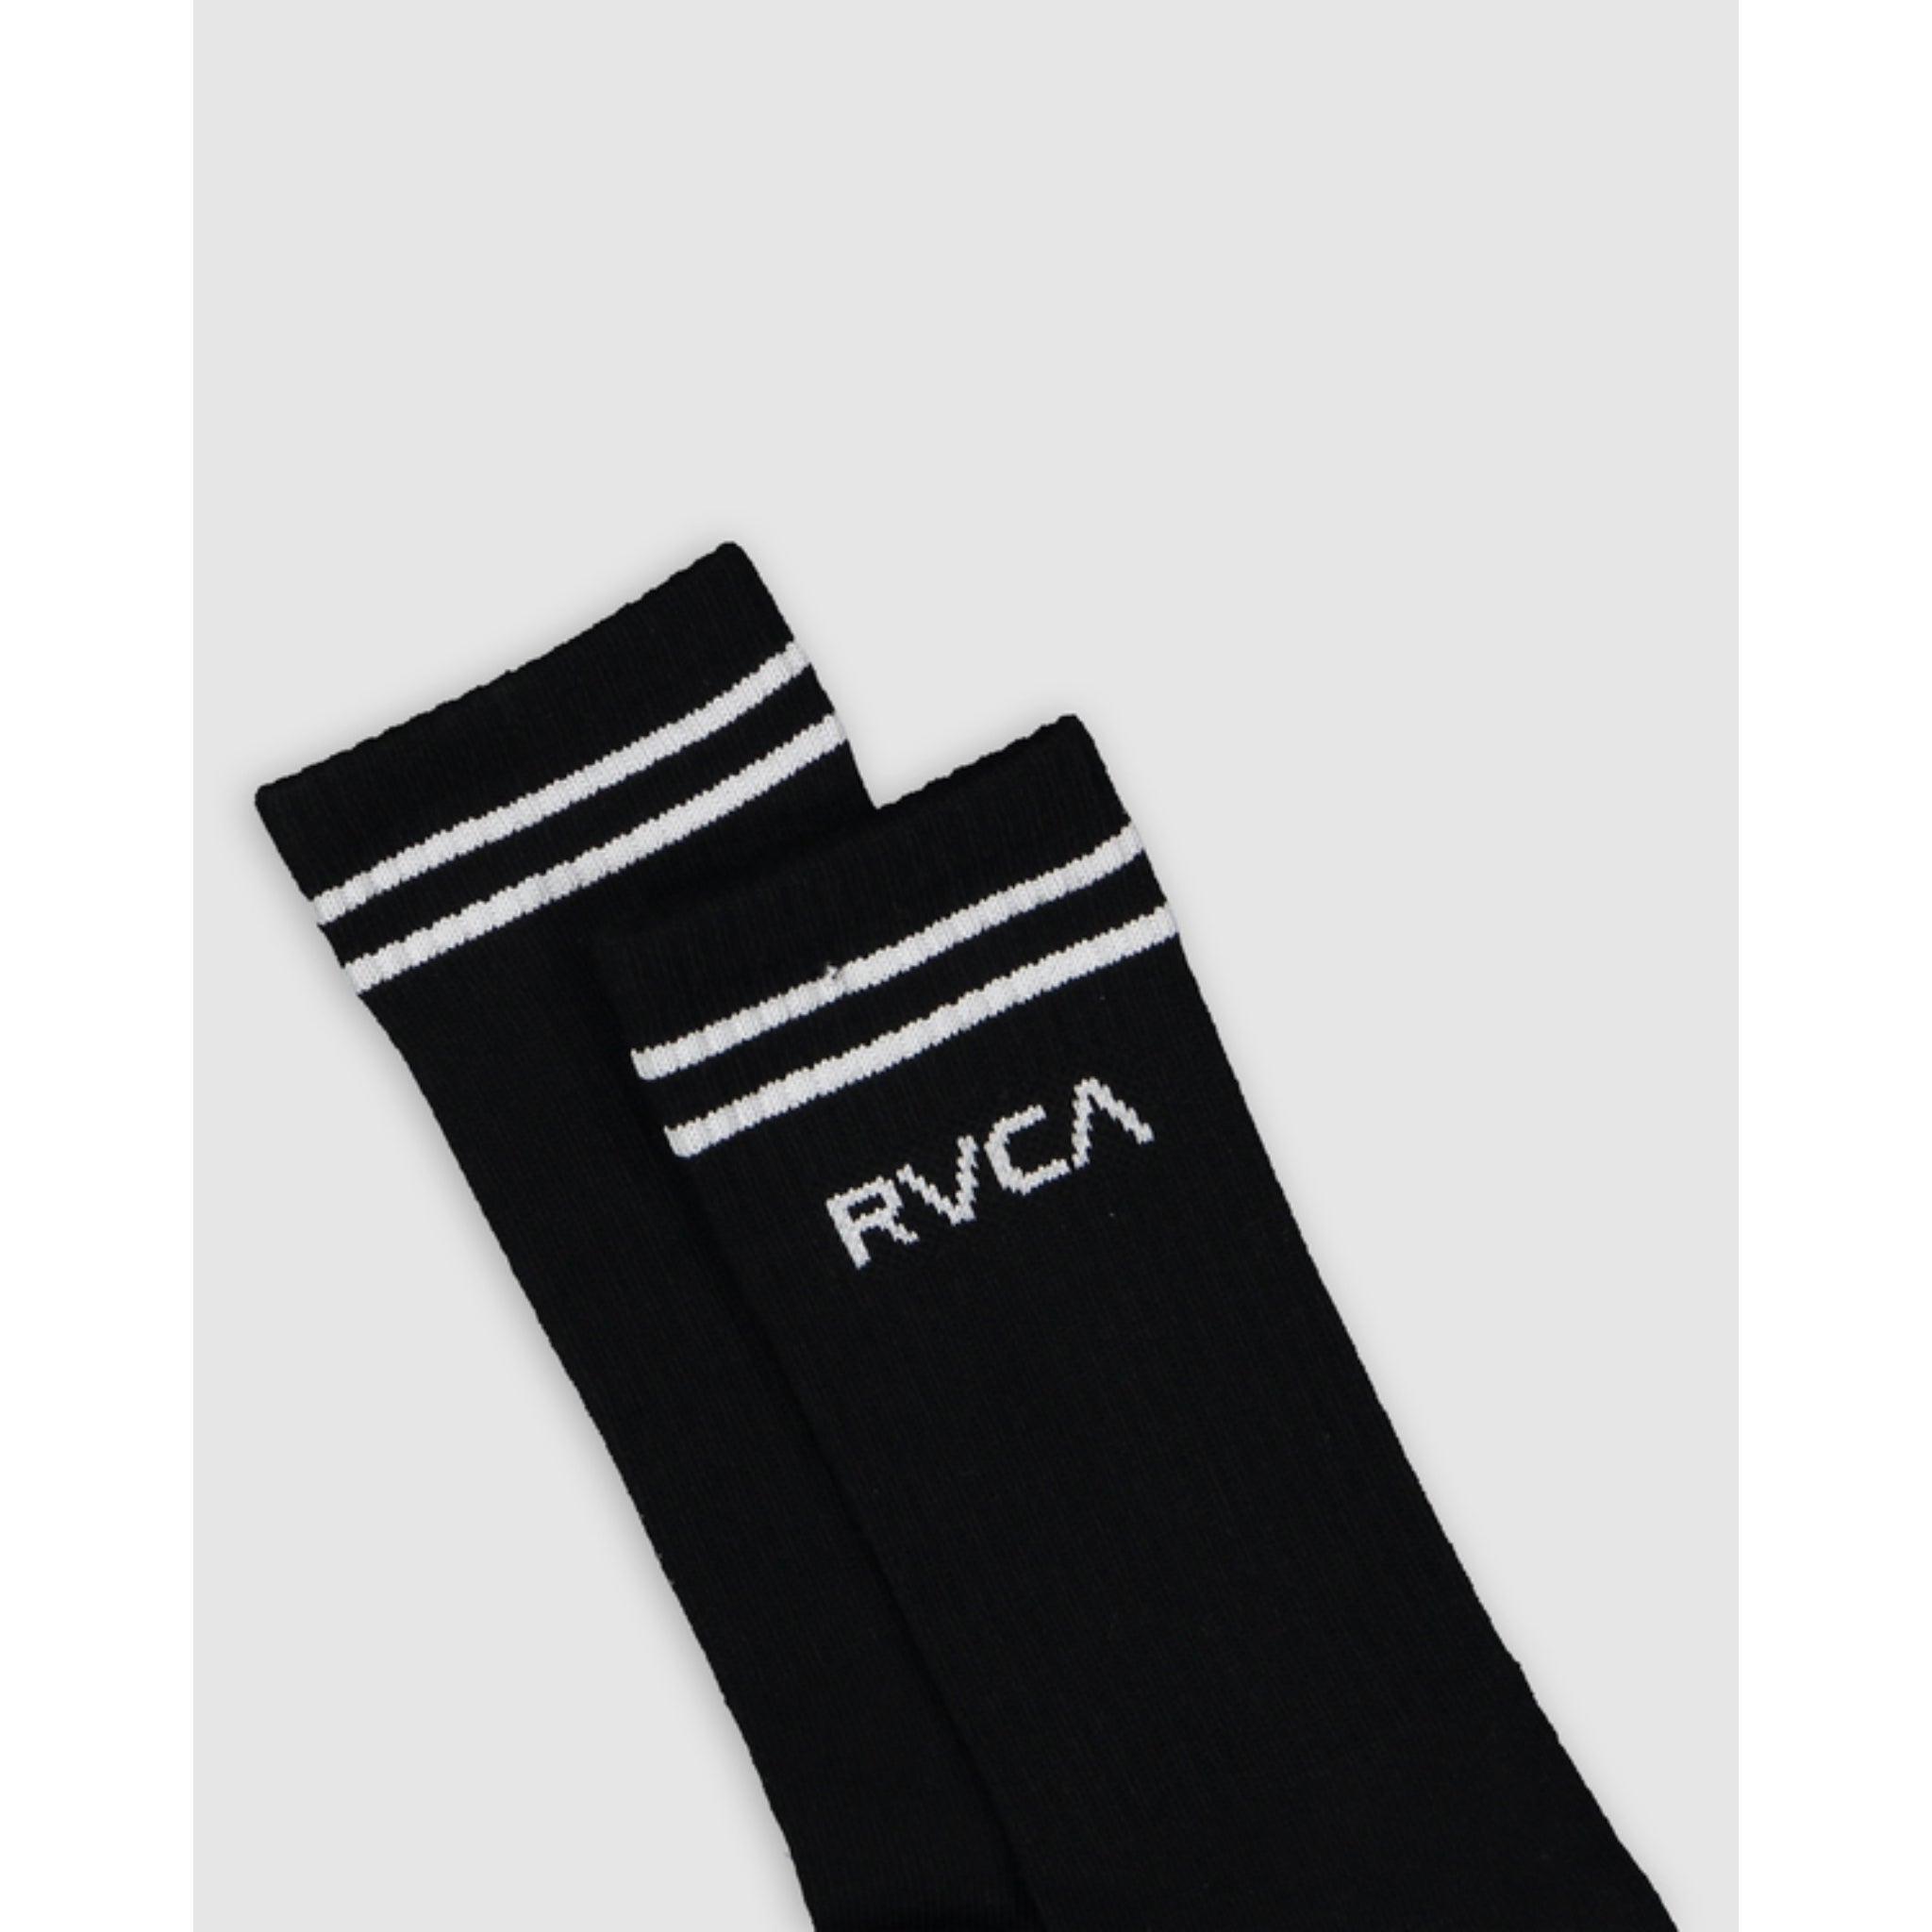 RVCA Union Sock III 5 Pack